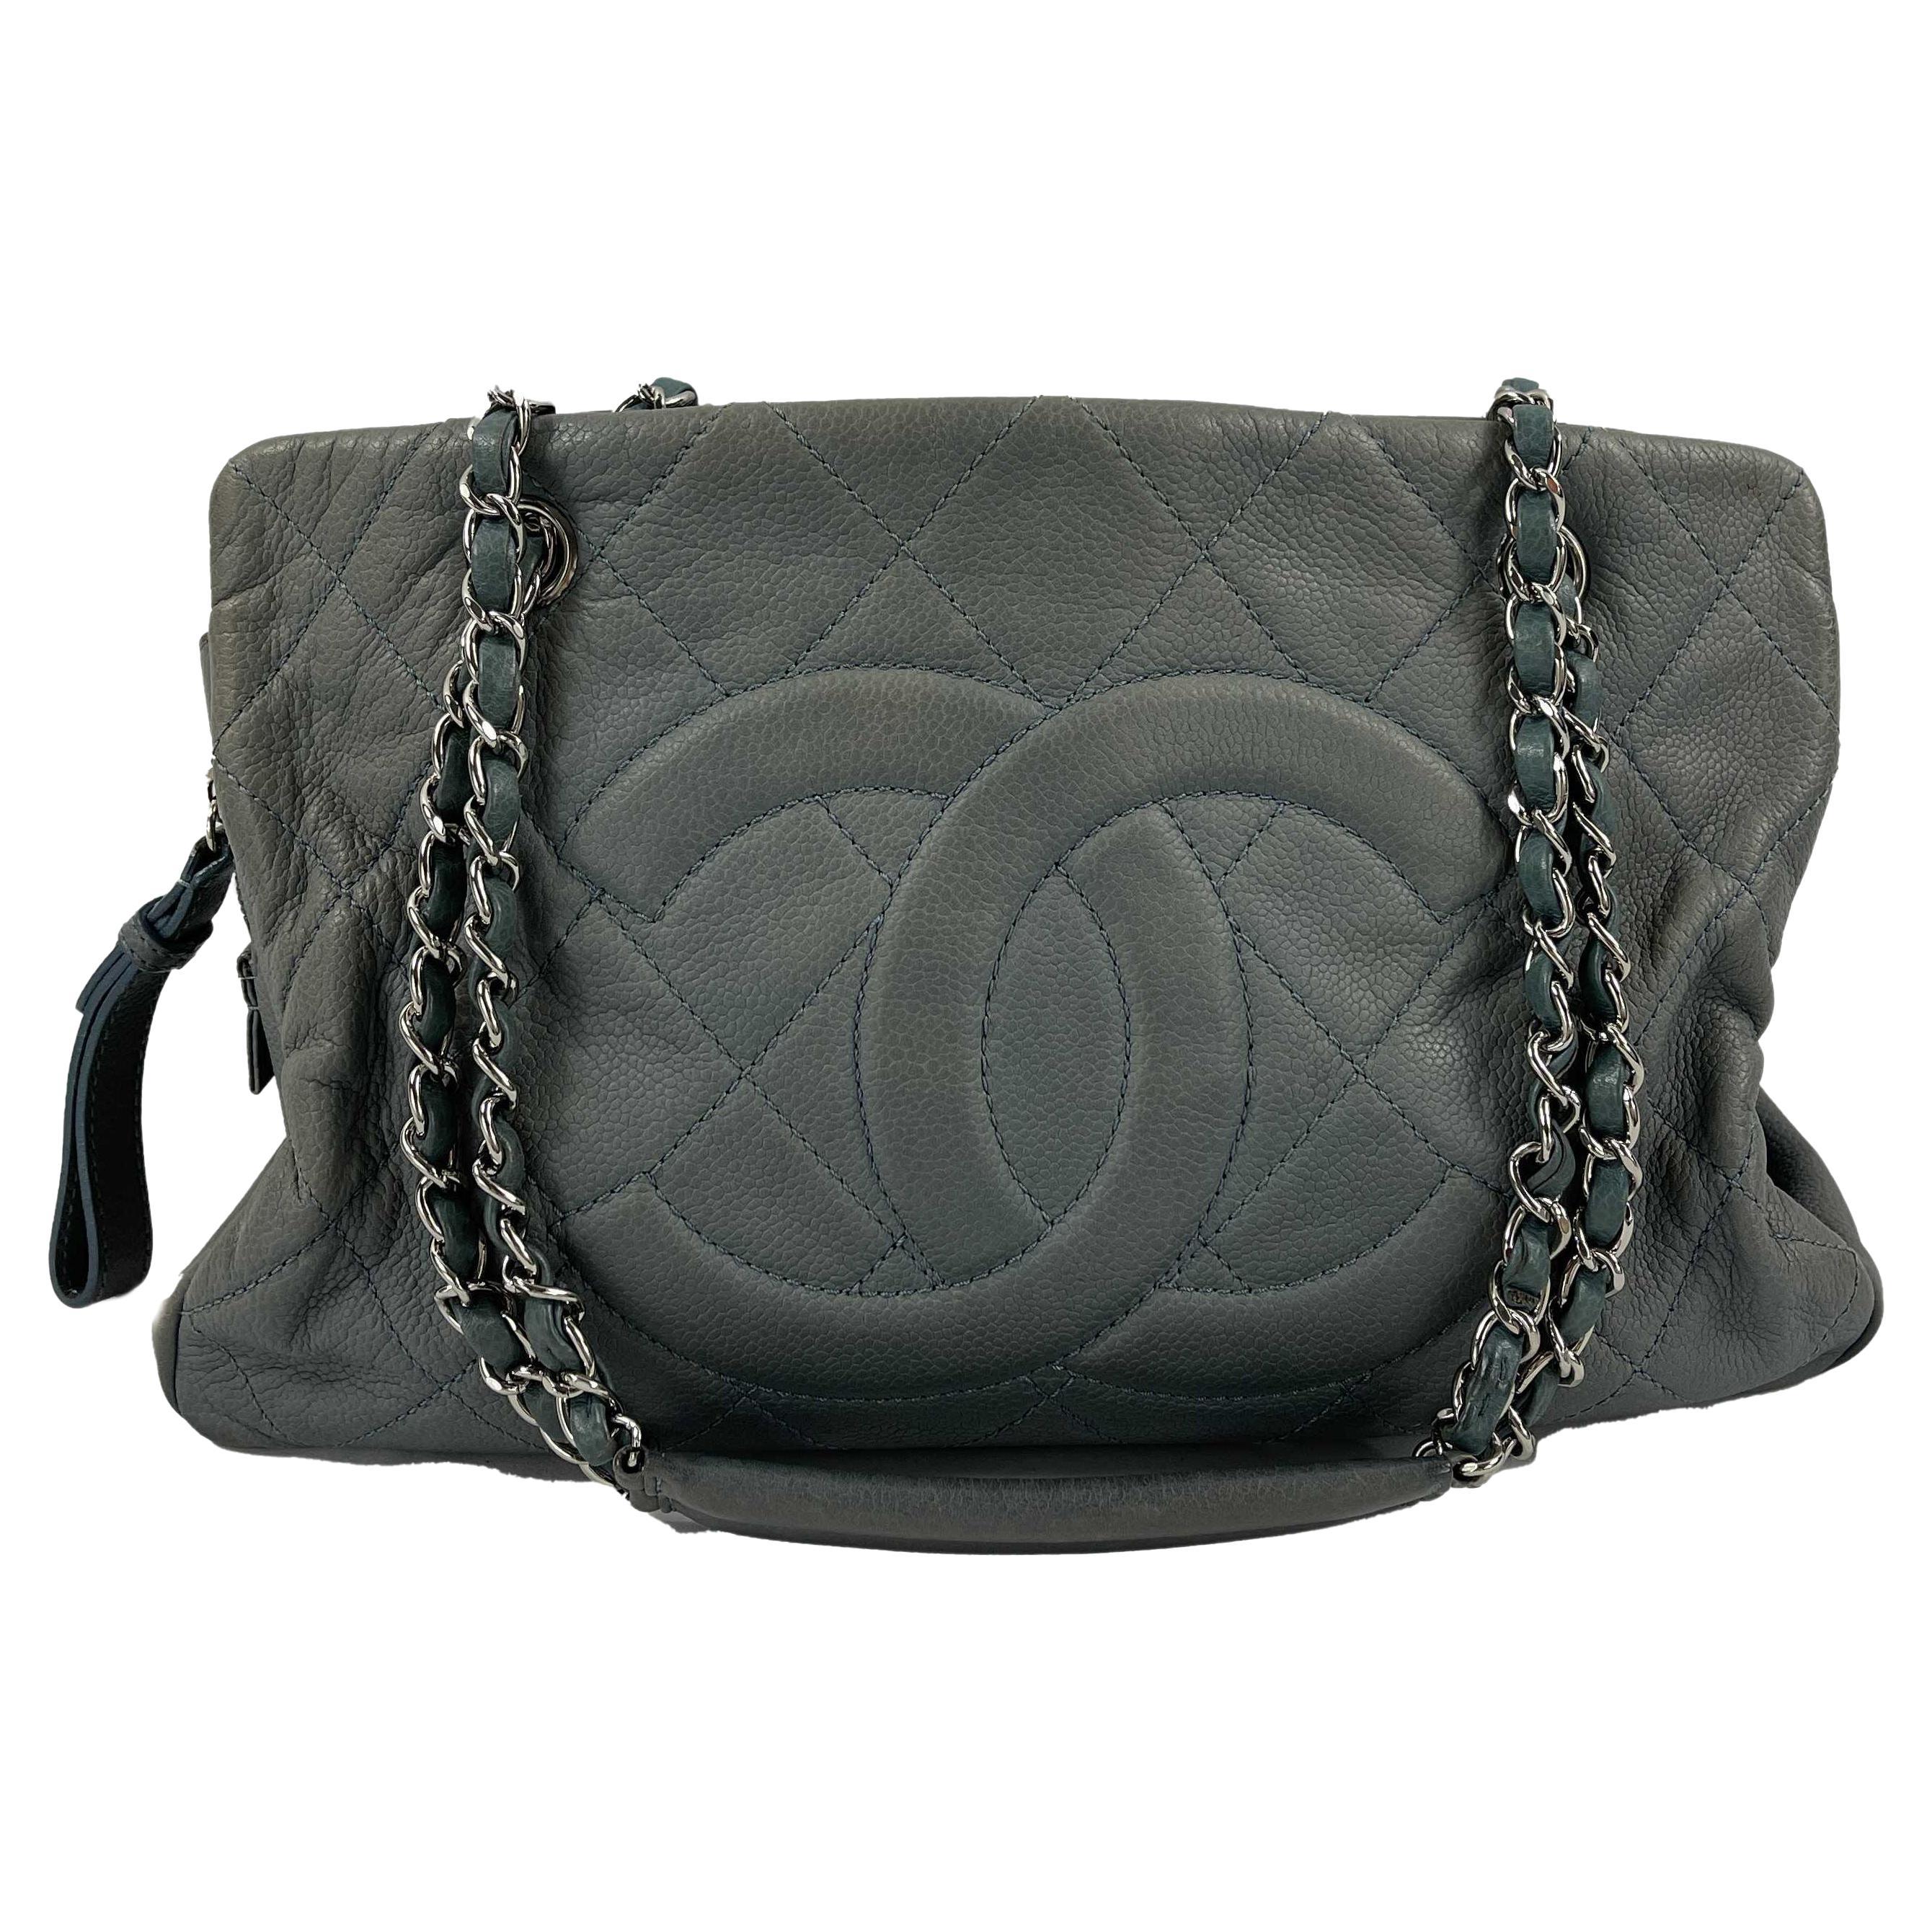 CHANEL  Seafoam / Silver CC Caviar Medium Leather Shopping Tote / Shoulder Bag For Sale